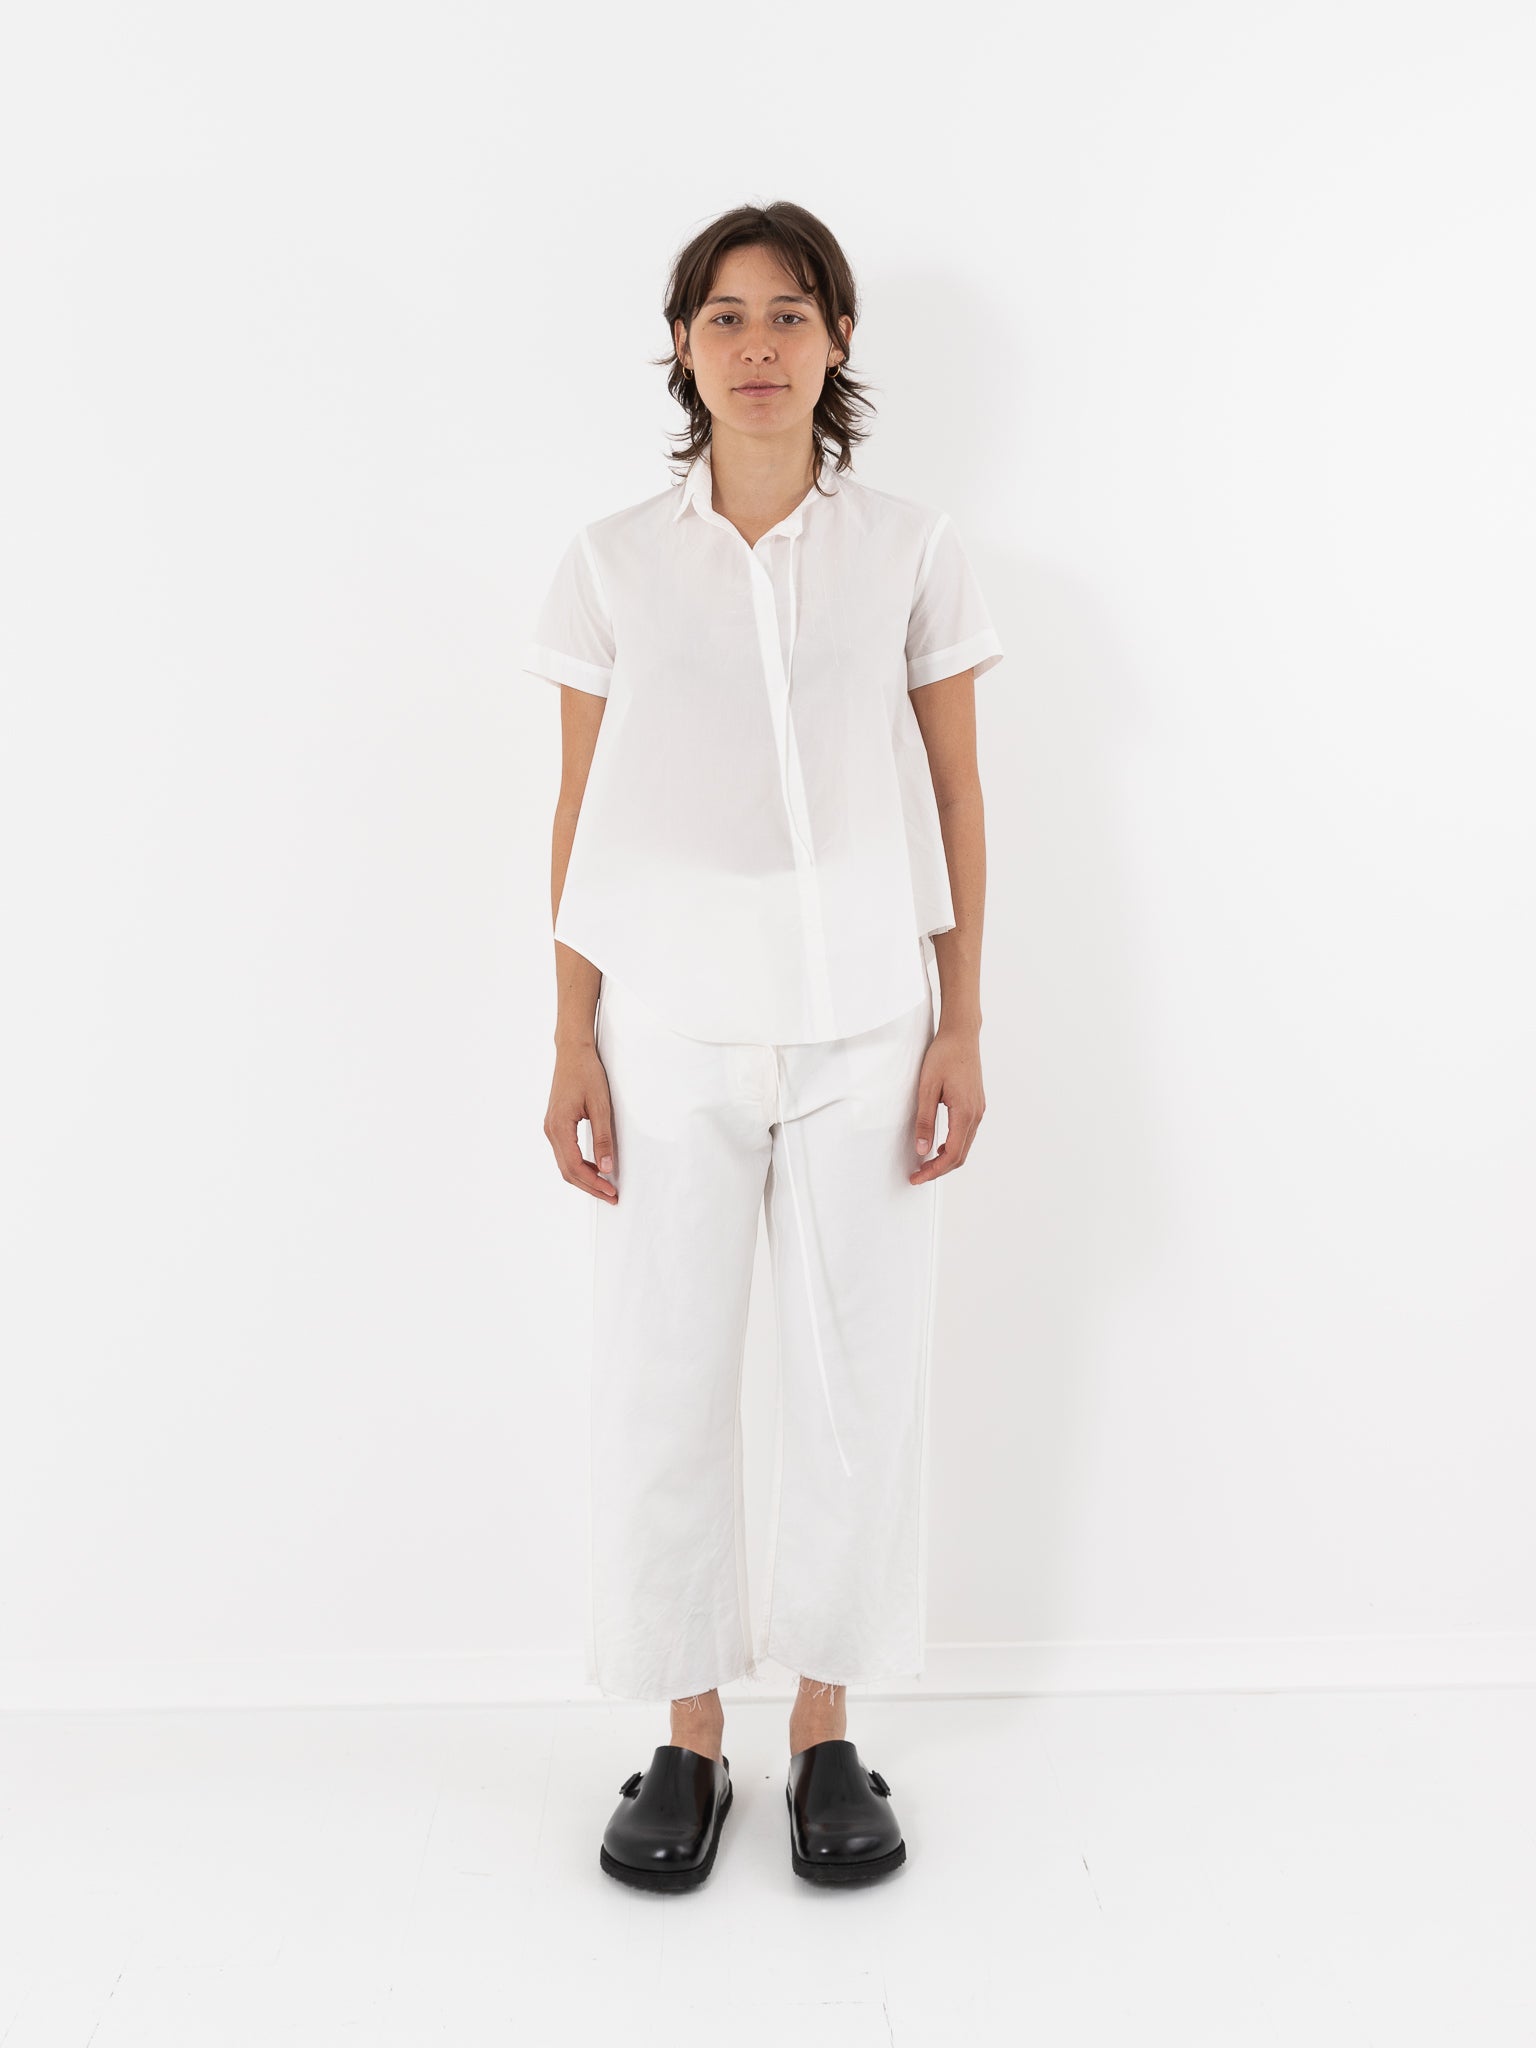 Serie Numerica S/S Shirt, White - Worthwhile, Inc.